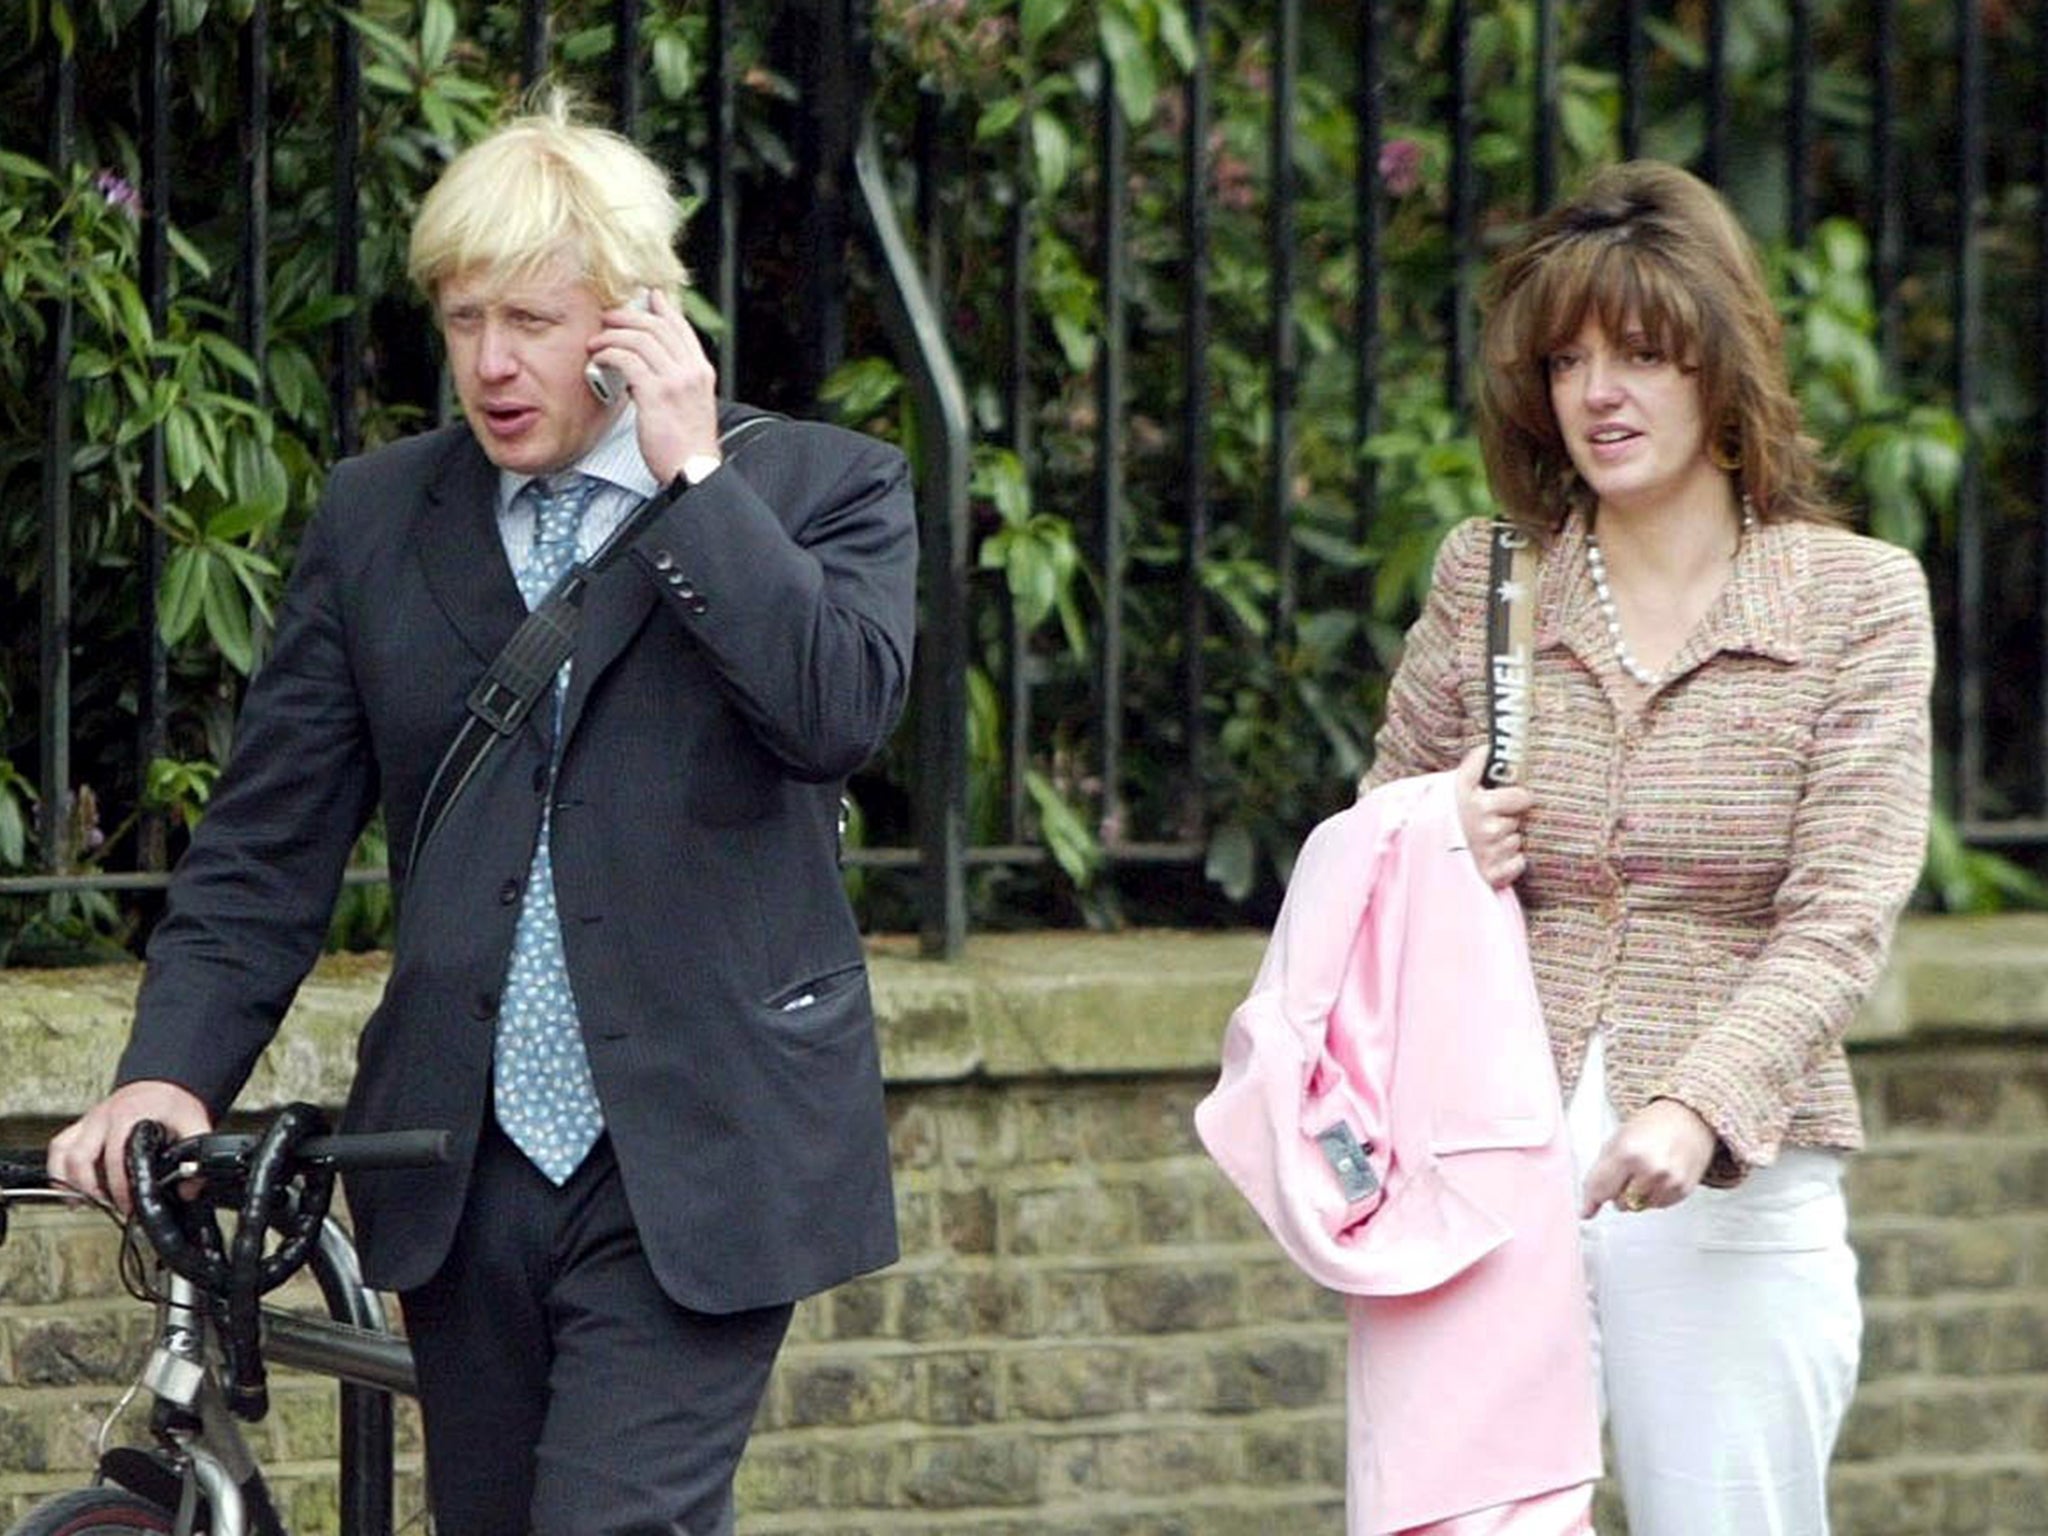 Petronella Wyatt is a former colleague of Boris Johnson